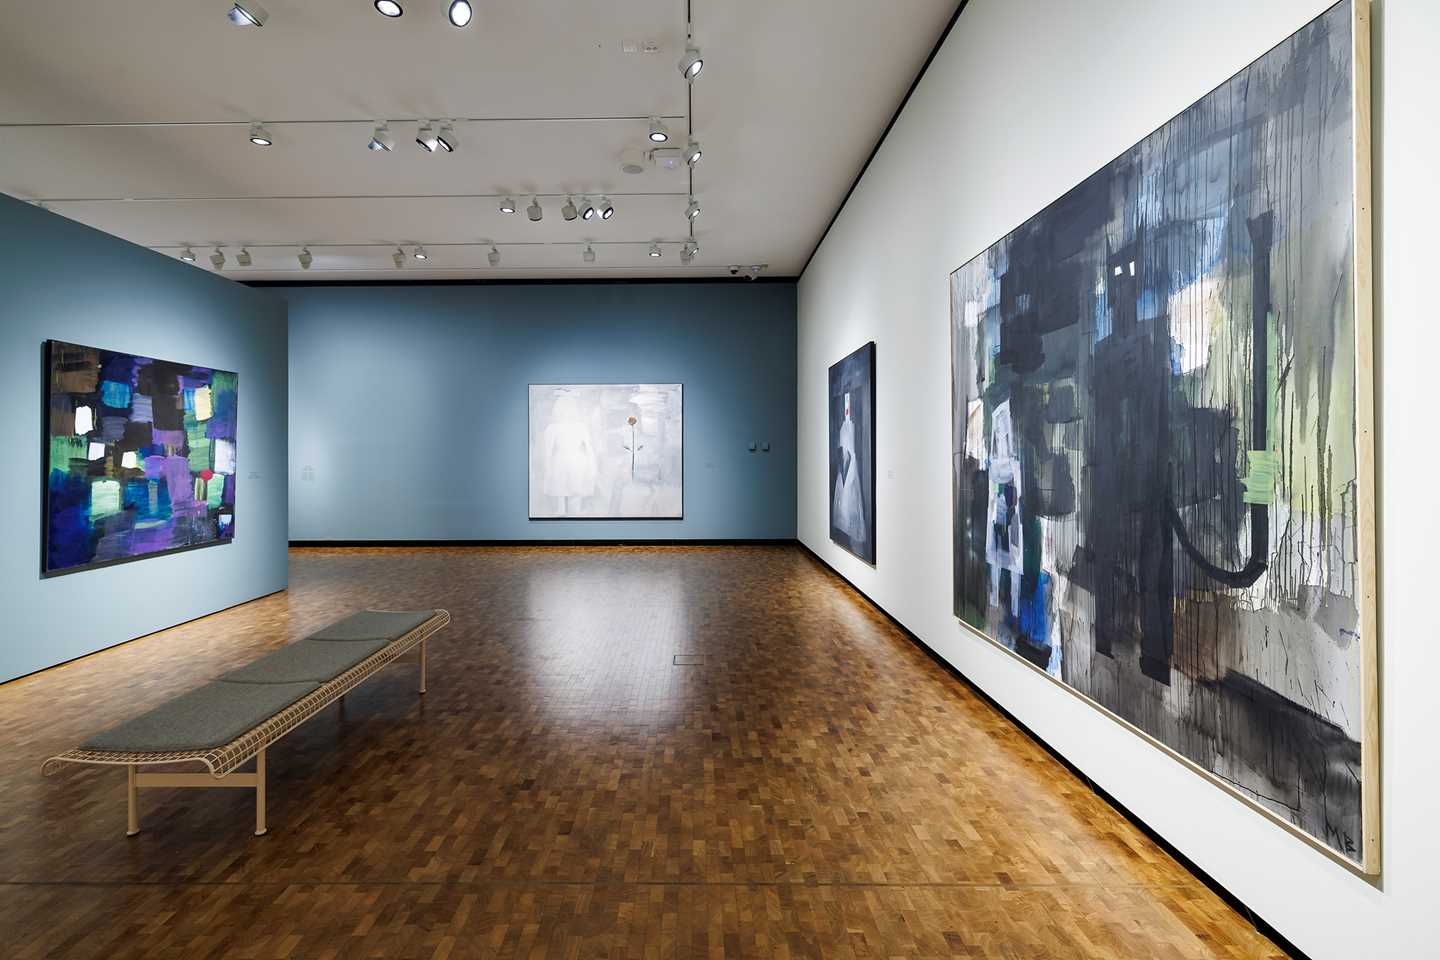 Installation view of the exhibition "Marianne Bratteli – Beating Heart". Photo: Kilian Munch © Munchmuseet 